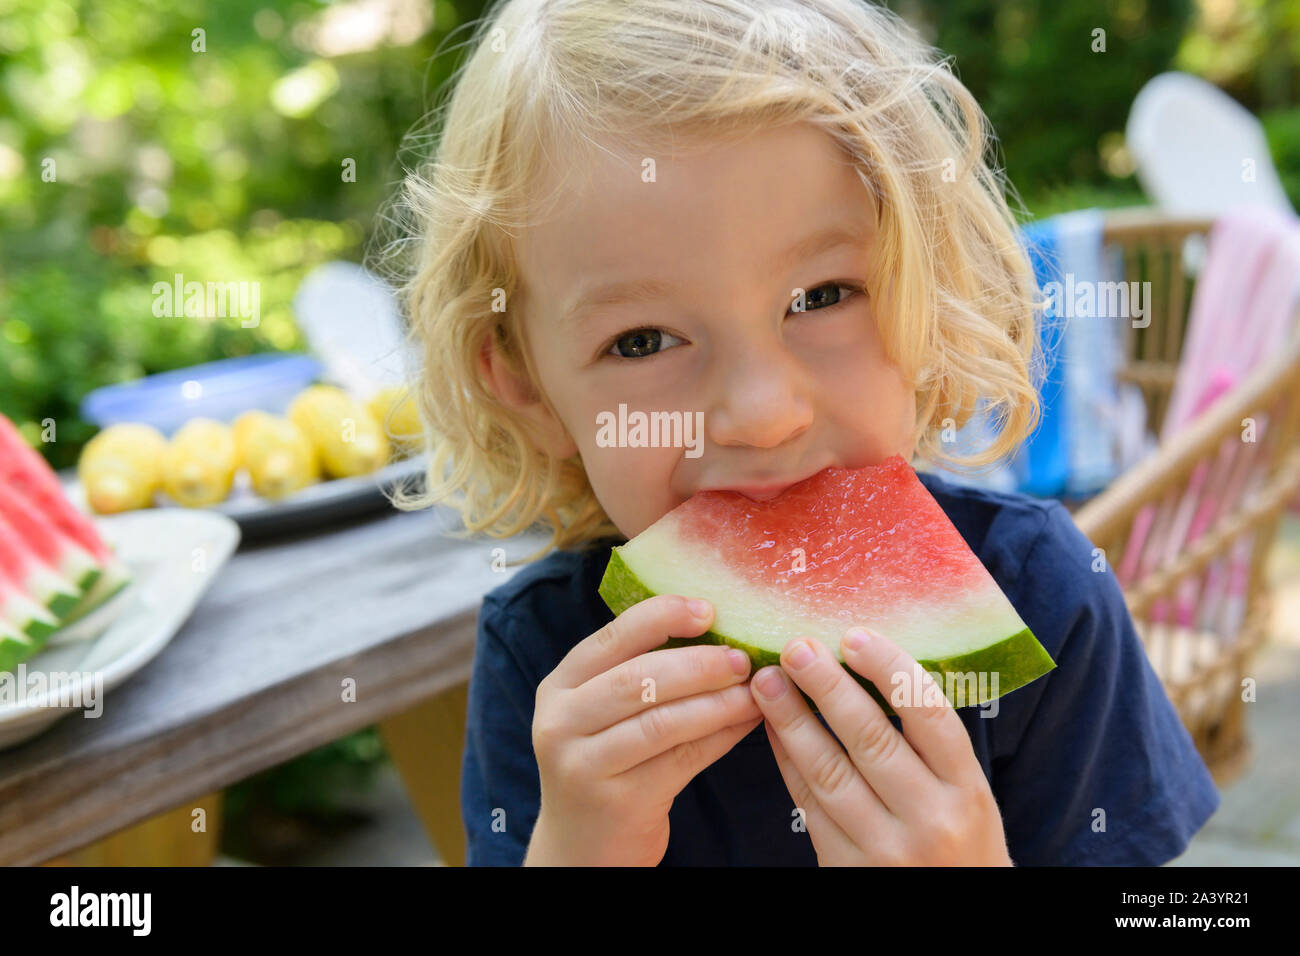 Boy eating watermelon Stock Photo